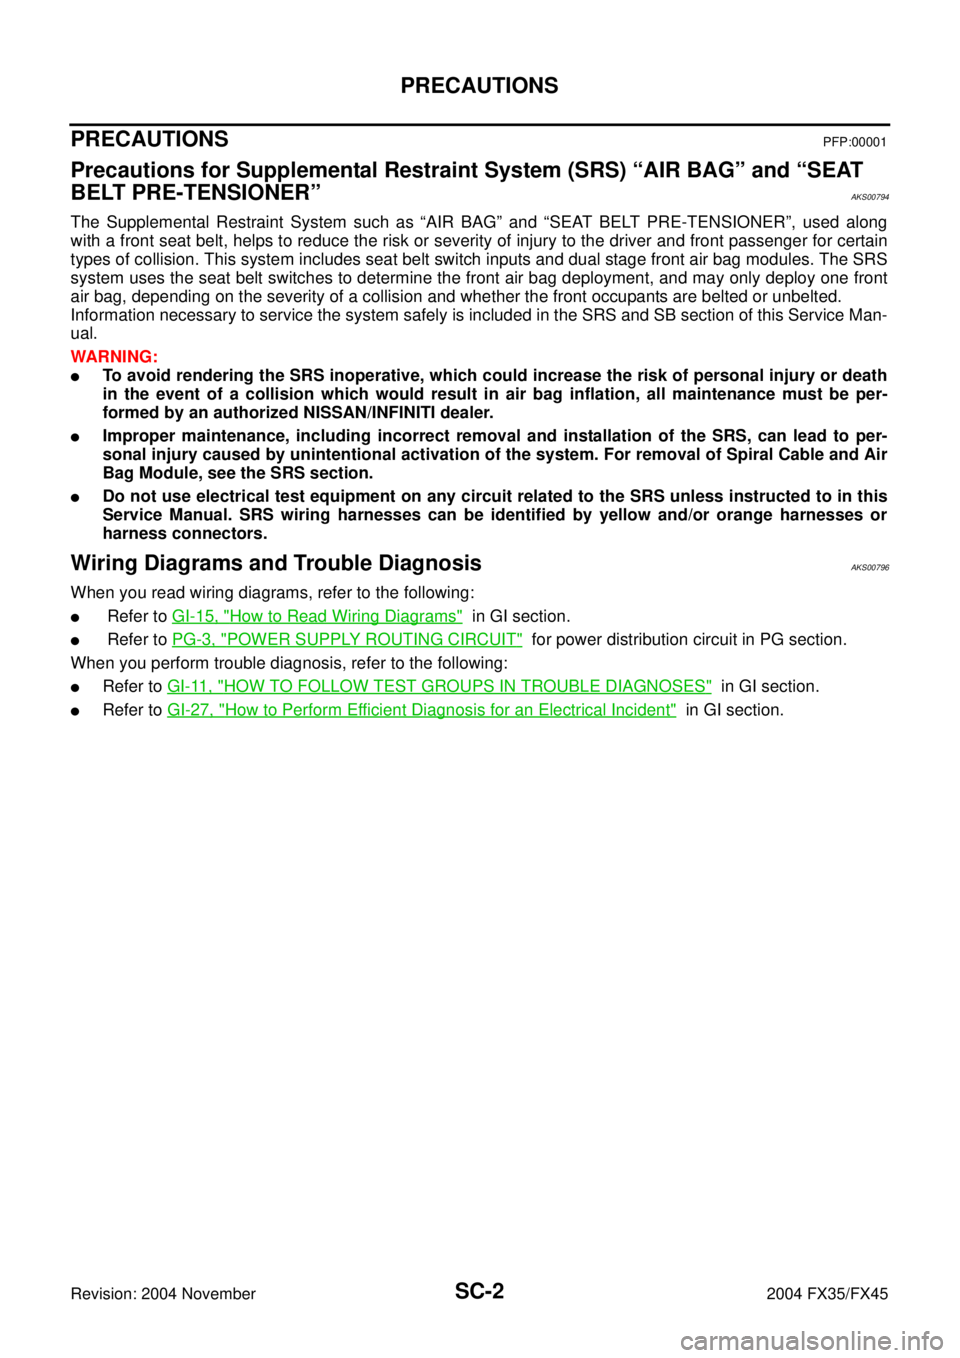 INFINITI FX35 2004  Service Manual SC-2
PRECAUTIONS
Revision: 2004 November 2004 FX35/FX45
PRECAUTIONSPFP:00001
Precautions for Supplemental Restraint System (SRS) “AIR BAG” and “SEAT 
BELT PRE-TENSIONER”
AKS00794
The Supplemen